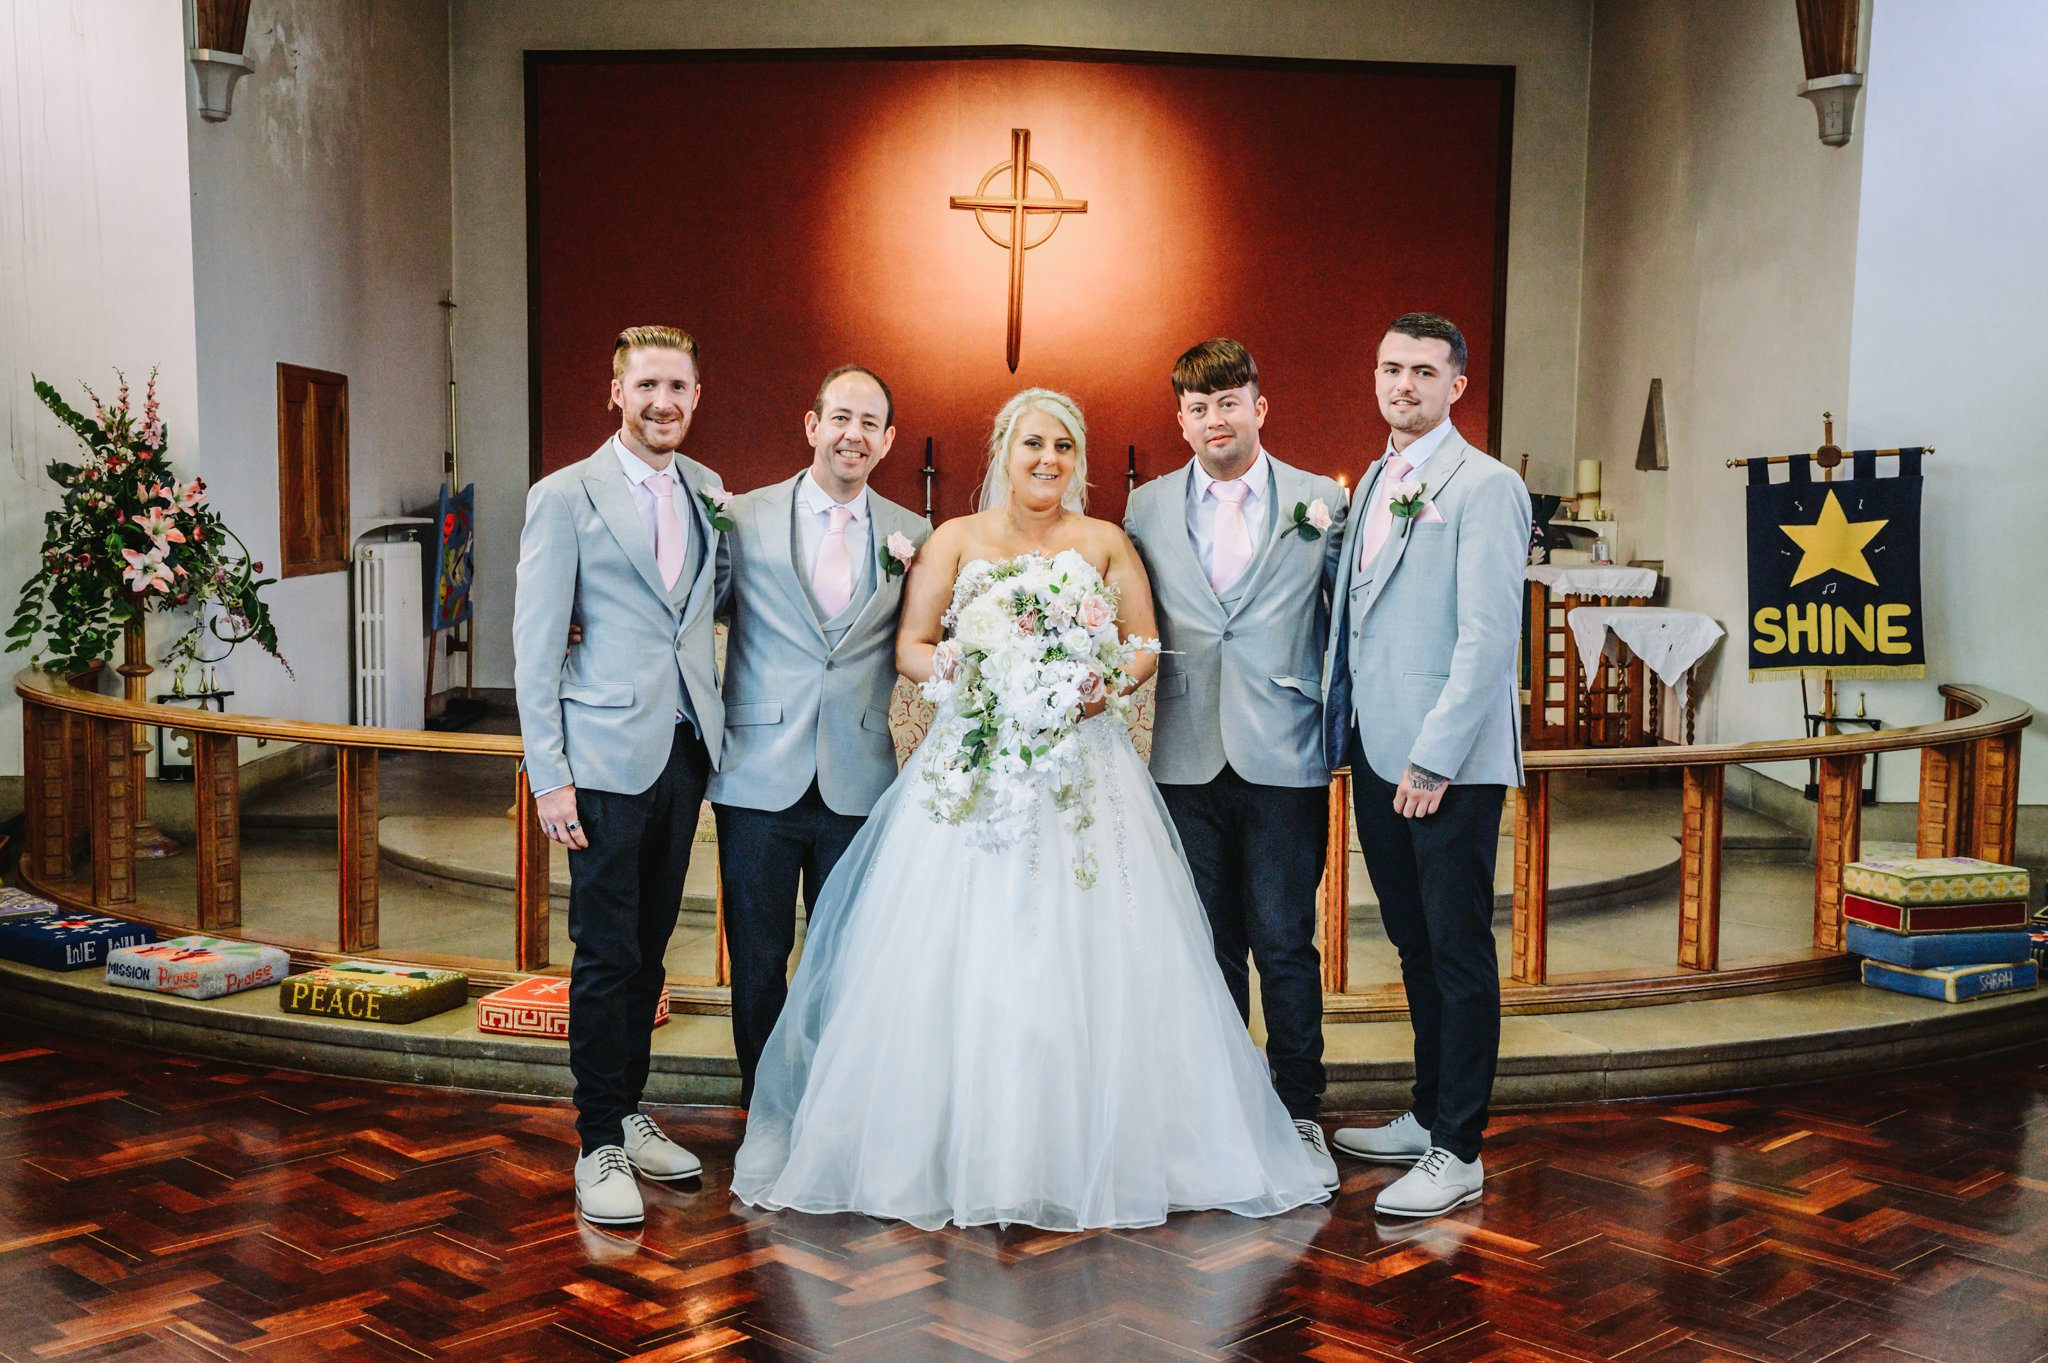 Saint-Clares-Church-Newton-Aycliffe-wedding-photograper (9 of 13).jpg